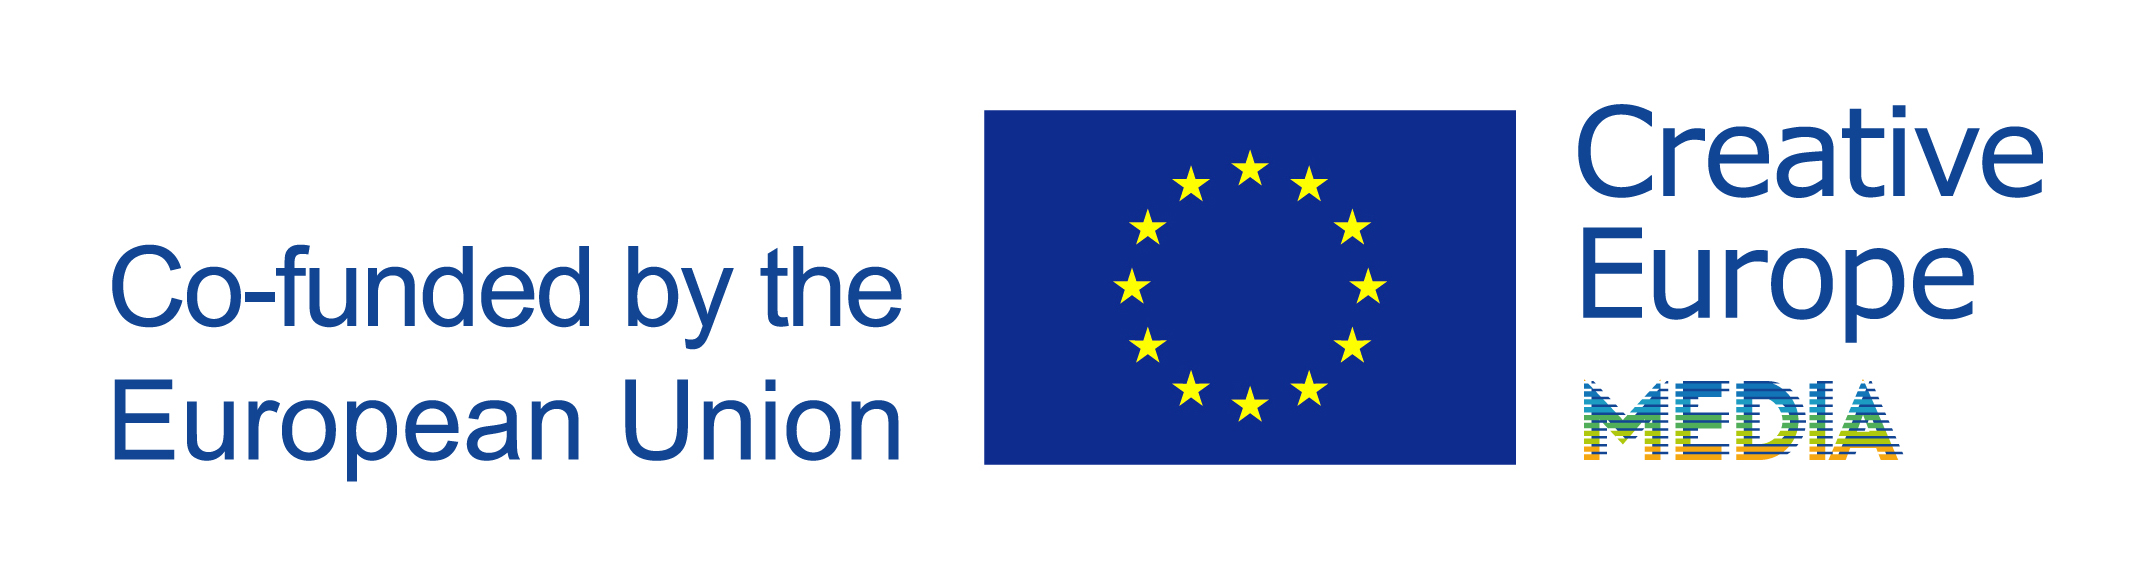 eu_flag_creative_europe_media_co_funded_en_[rgb]_